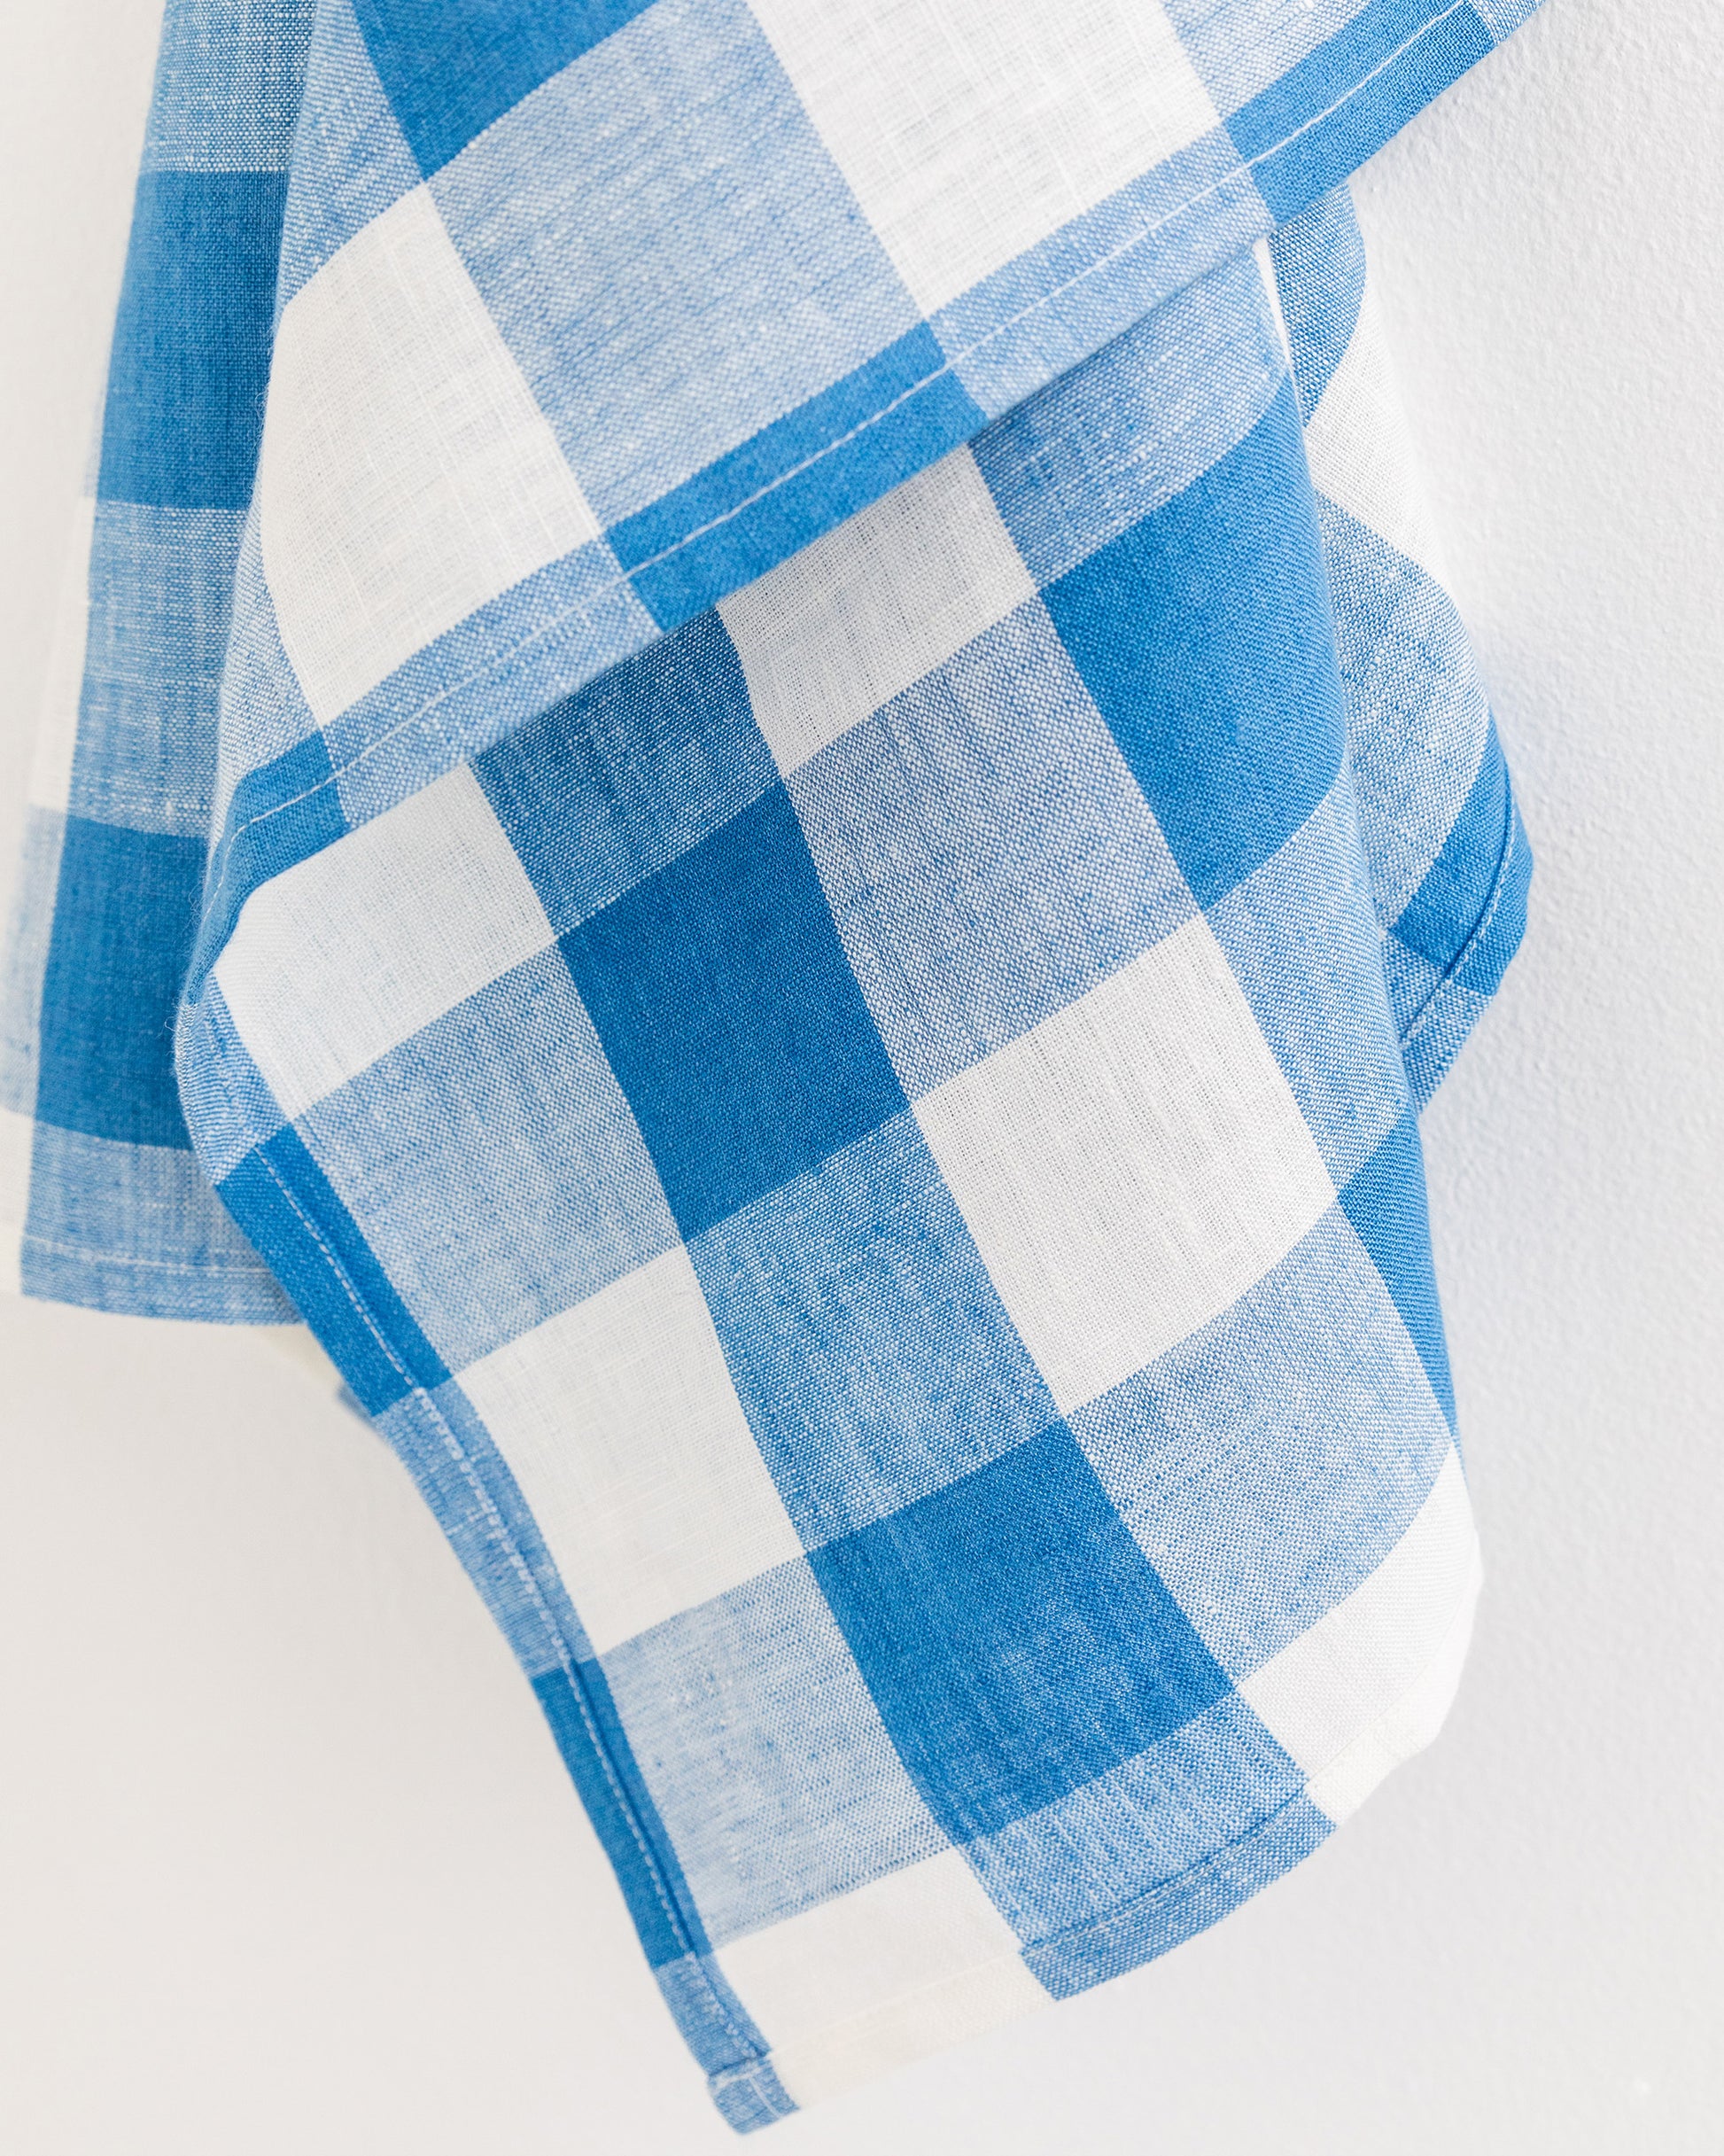 Linen tea towel in Cobalt blue gingham - MagicLinen